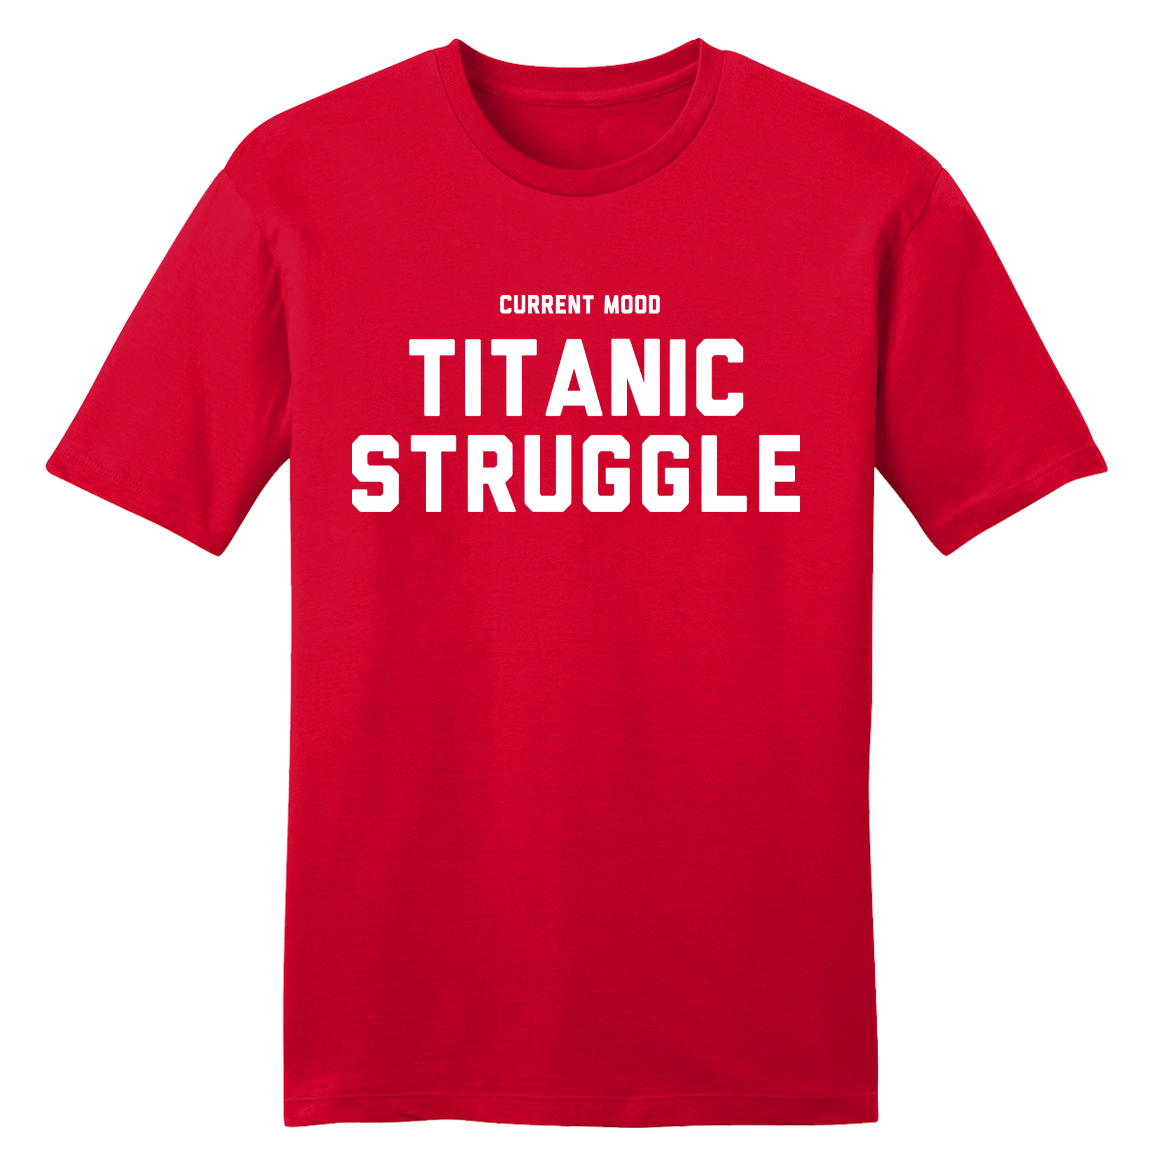 Titanic Struggle tee